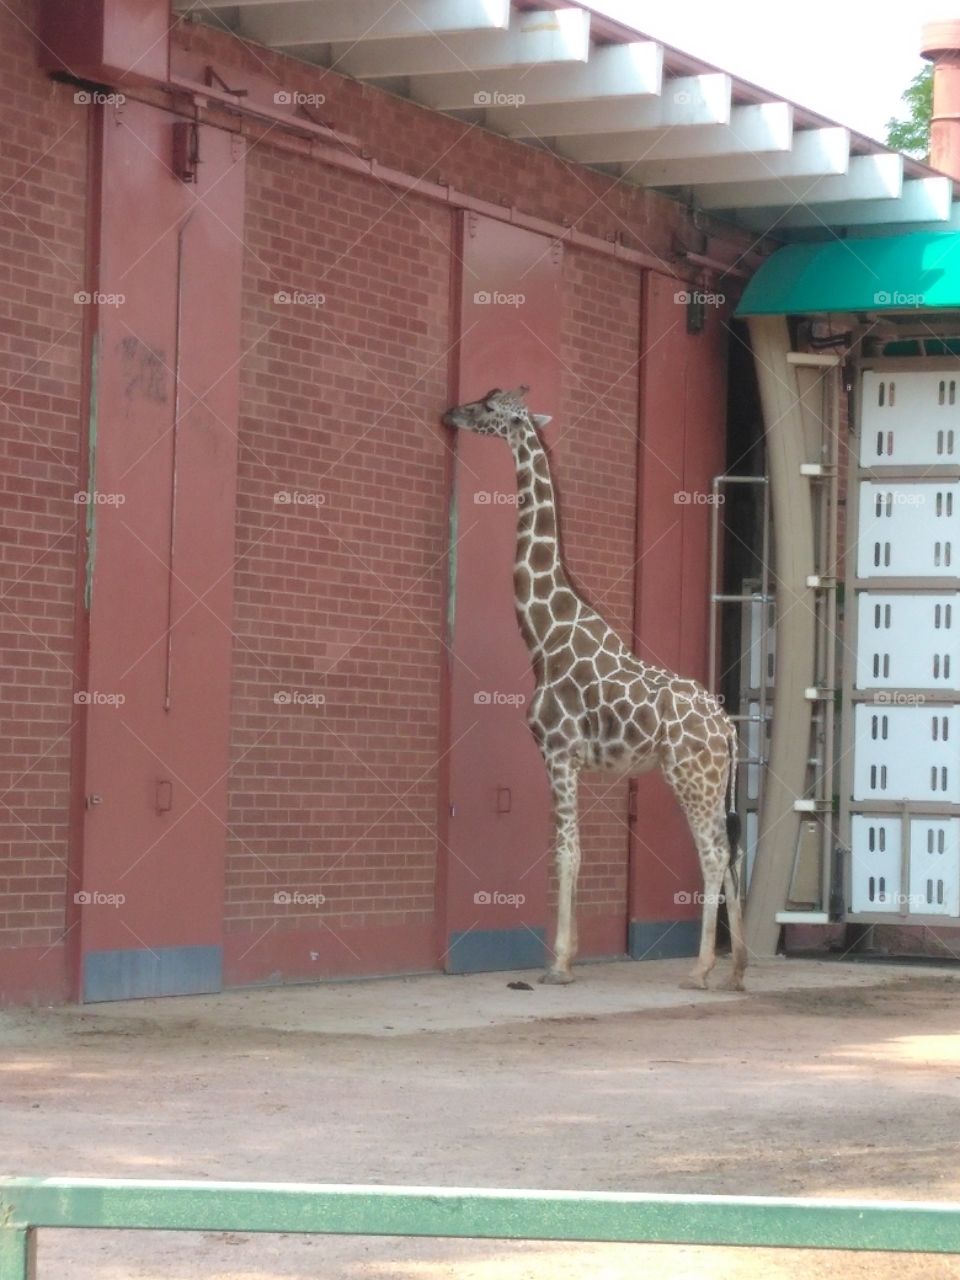 Giraffe licks the... wall?